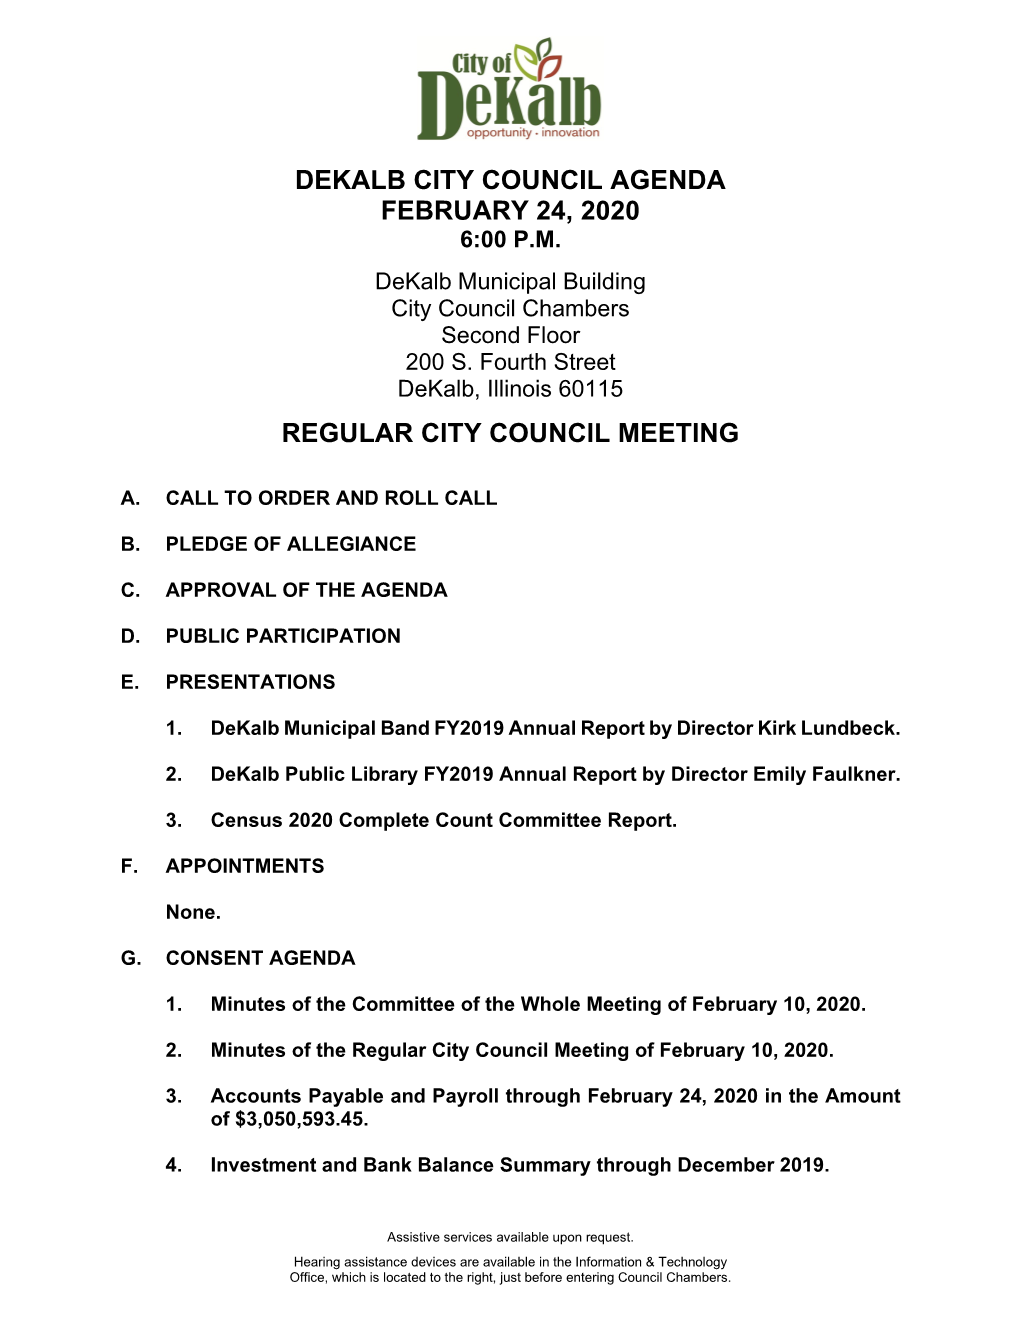 Dekalb City Council Agenda February 24, 2020 Regular